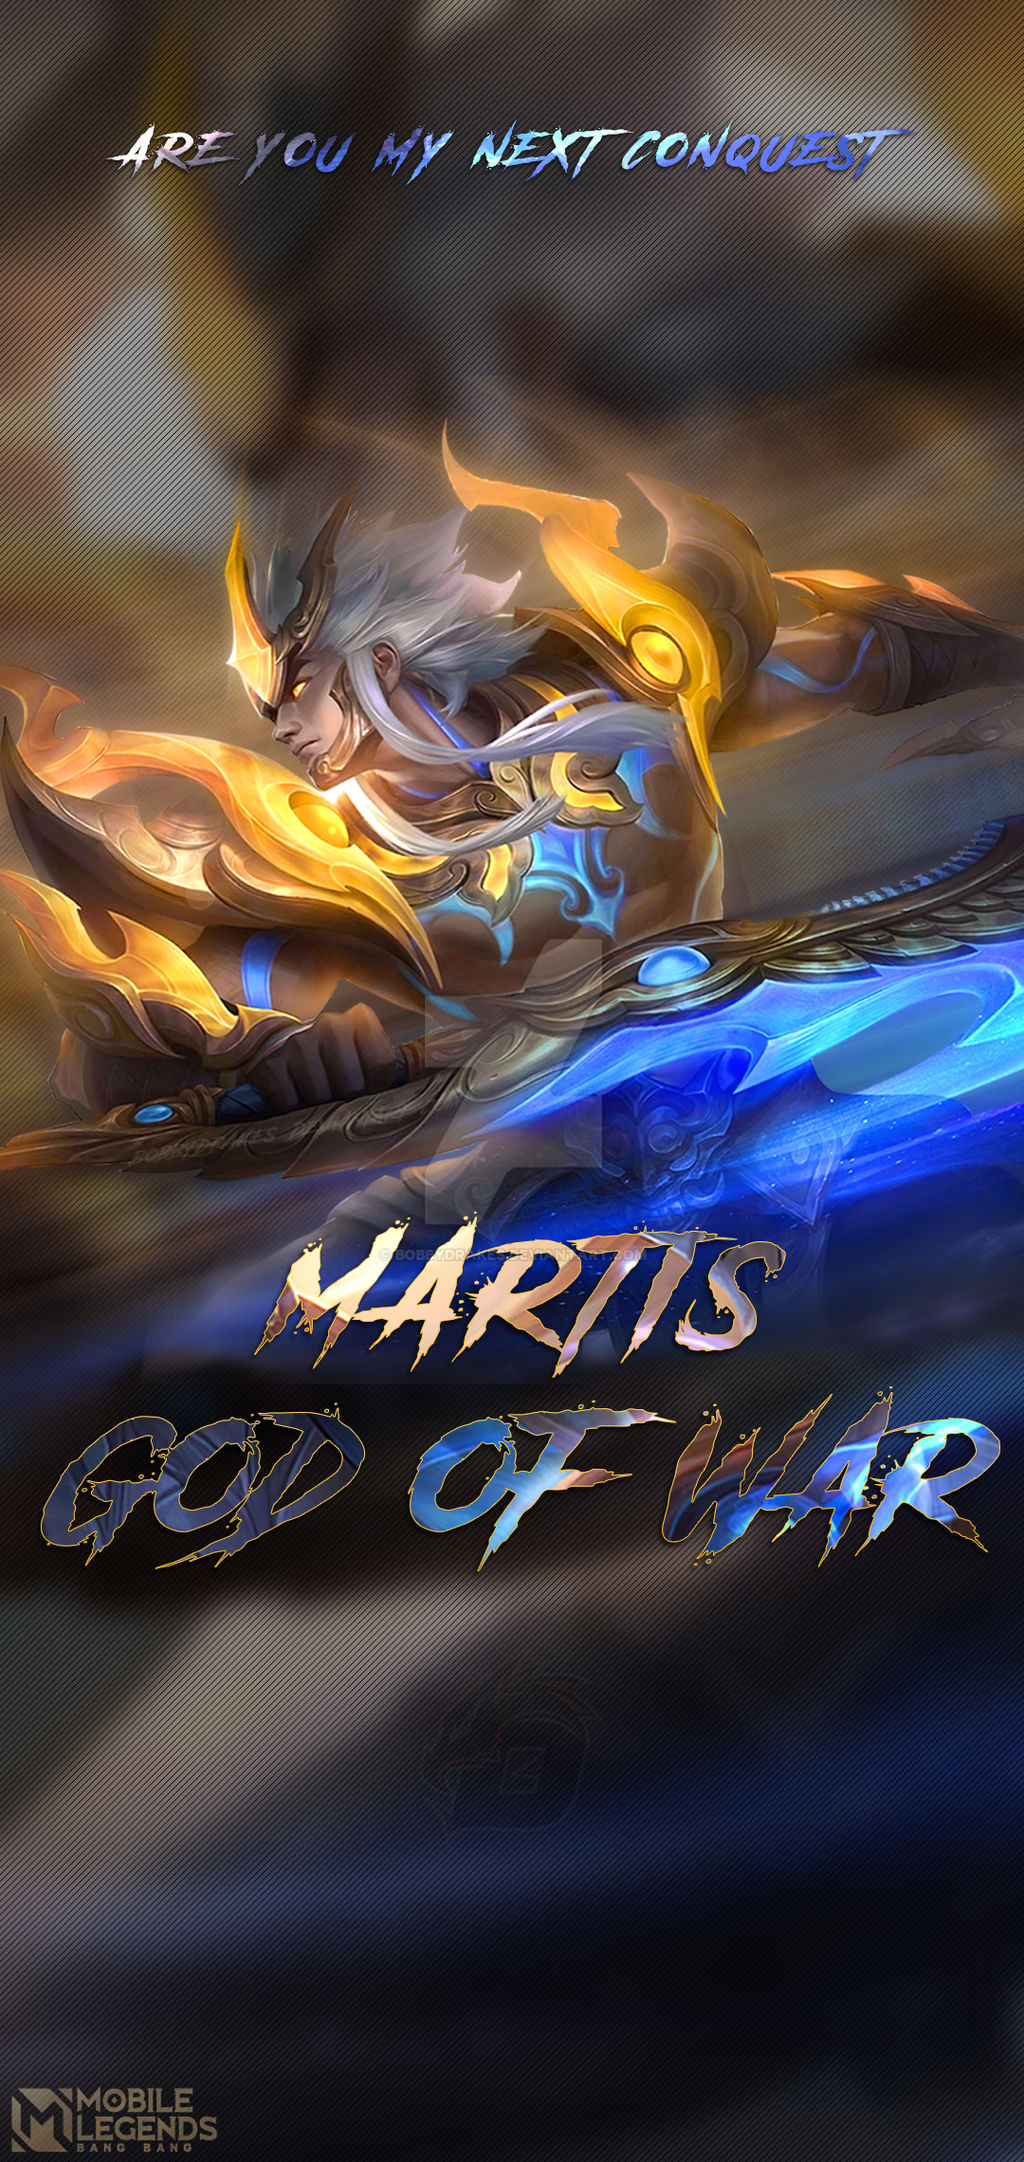 Martis God of War v2 mobile wallpaper by bobbydrakes on DeviantArt